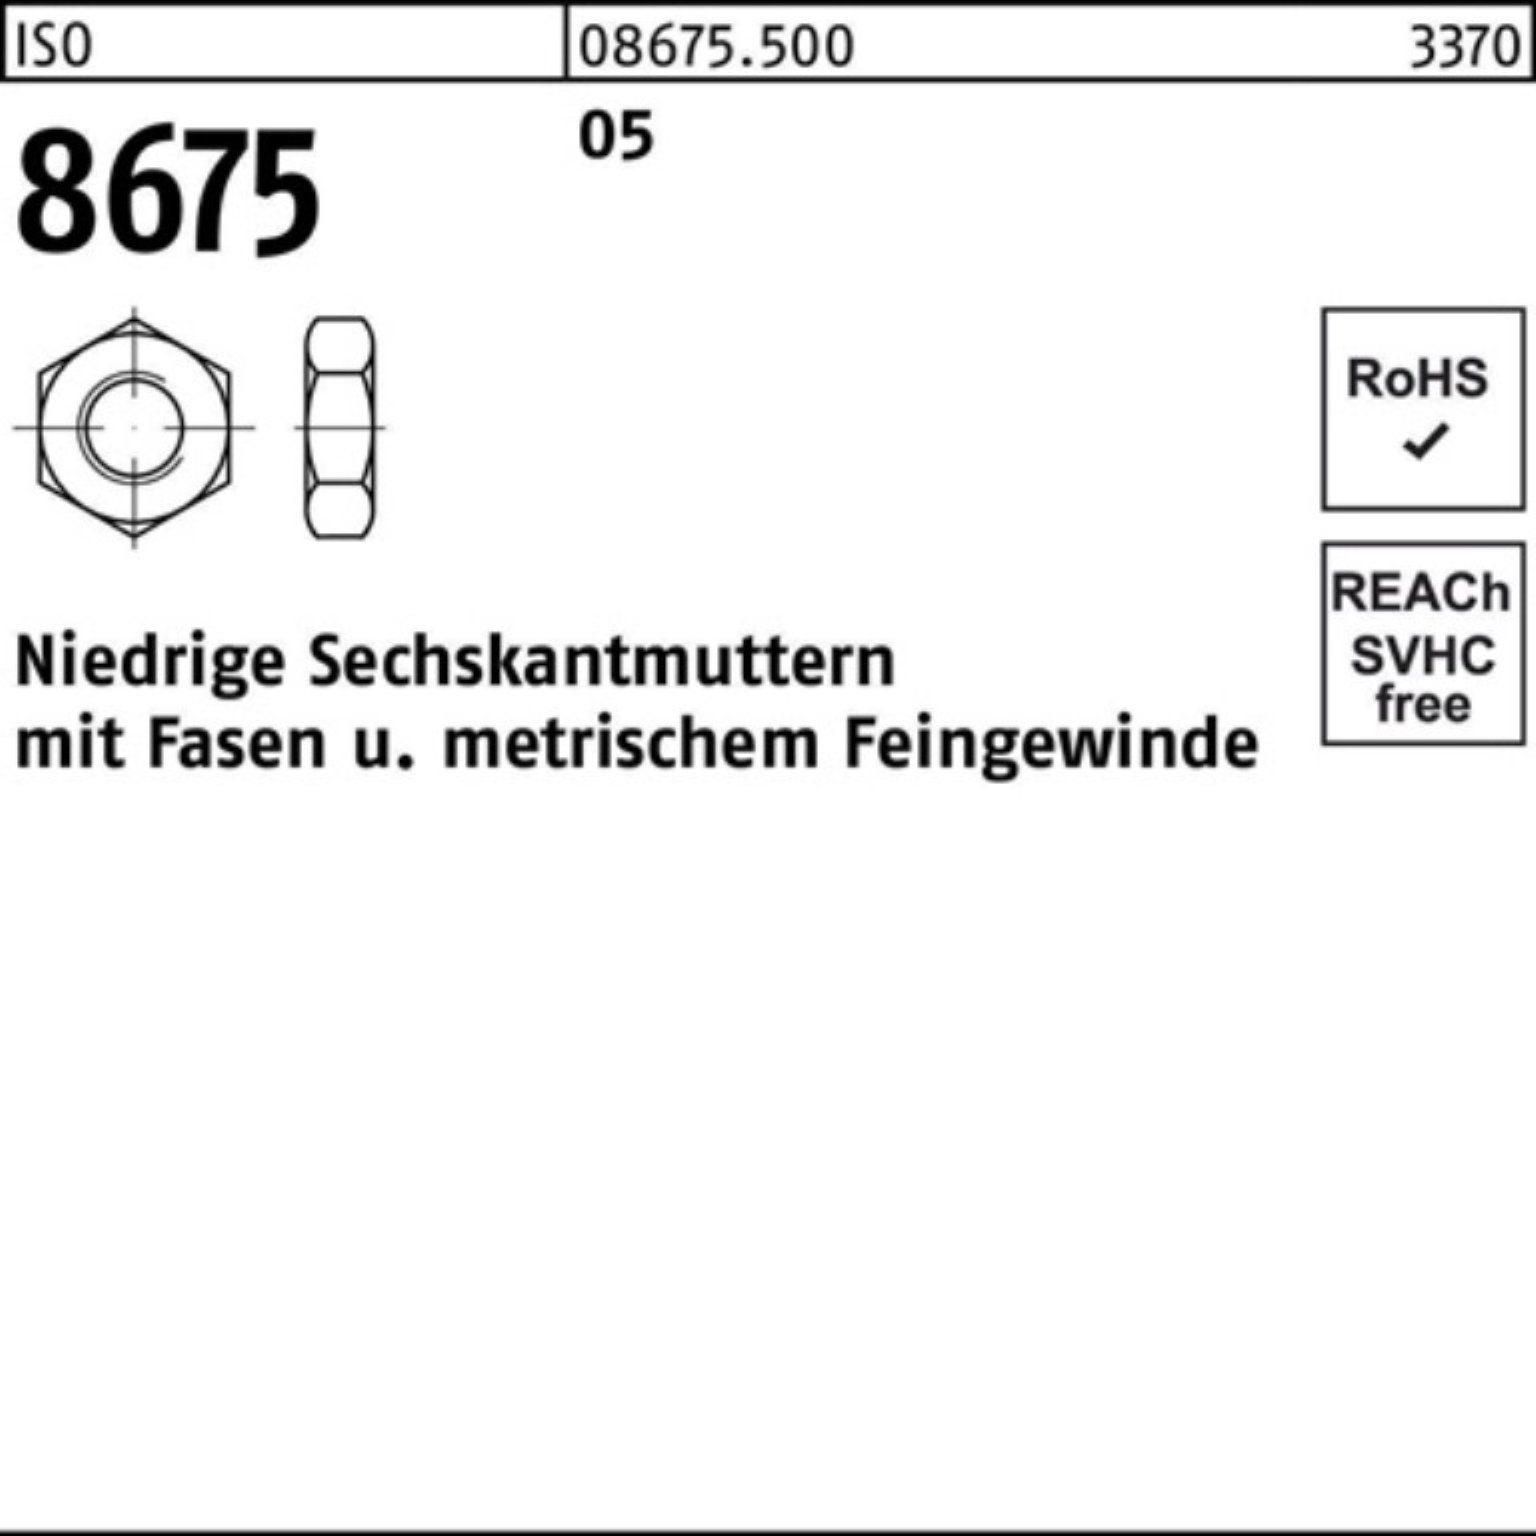 Reyher Muttern 100er Pack Sechskantmutter 8 8675 5 ISO ISO 1,25 M10x Stück 100 Fasen